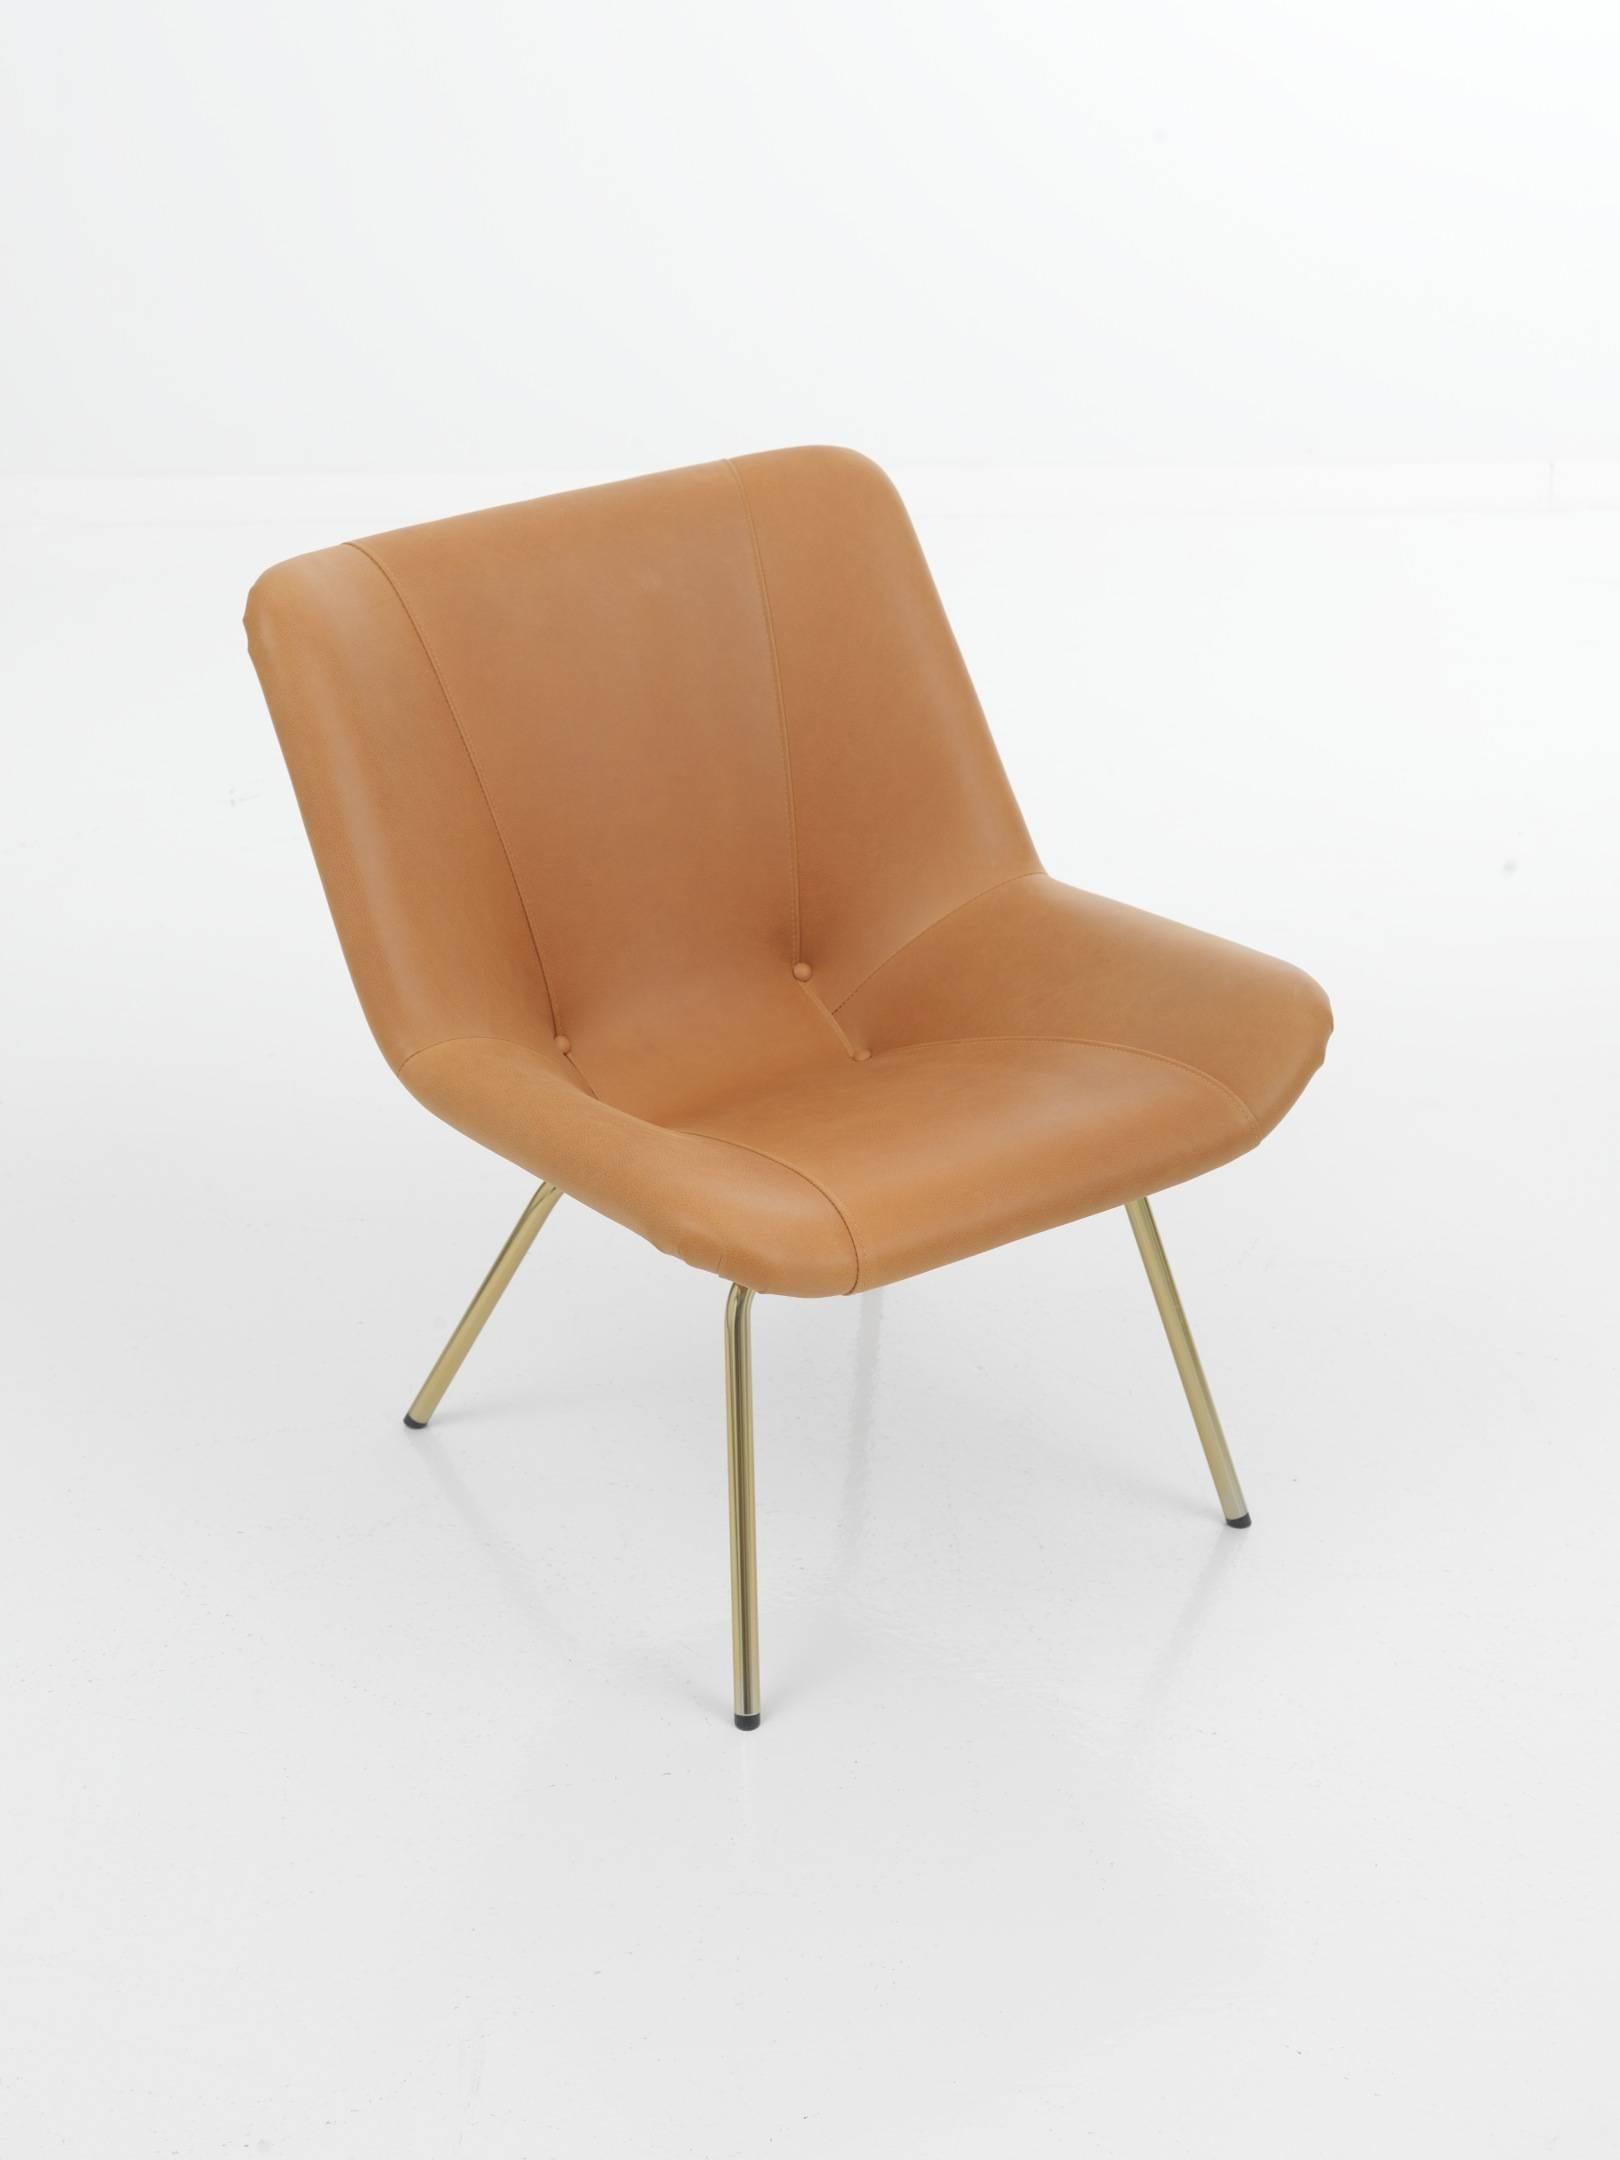 Scandinavian Modern Lehti Chair in Leather by Carl Gustav Hiort af Ornäs For Sale